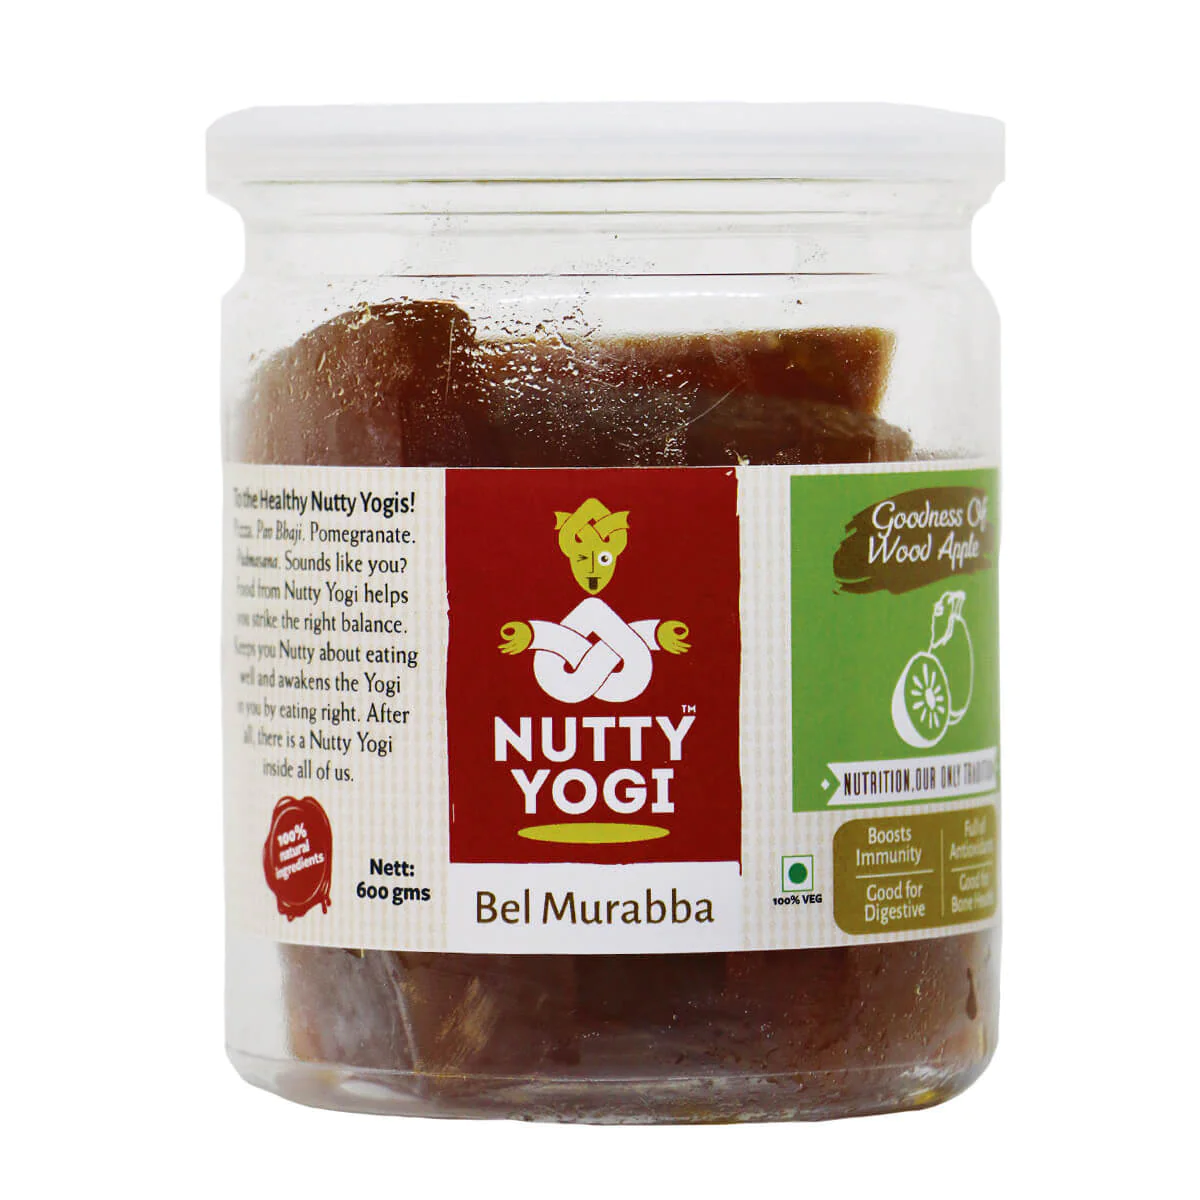 Product: Nutty Yogi Bel Murabba